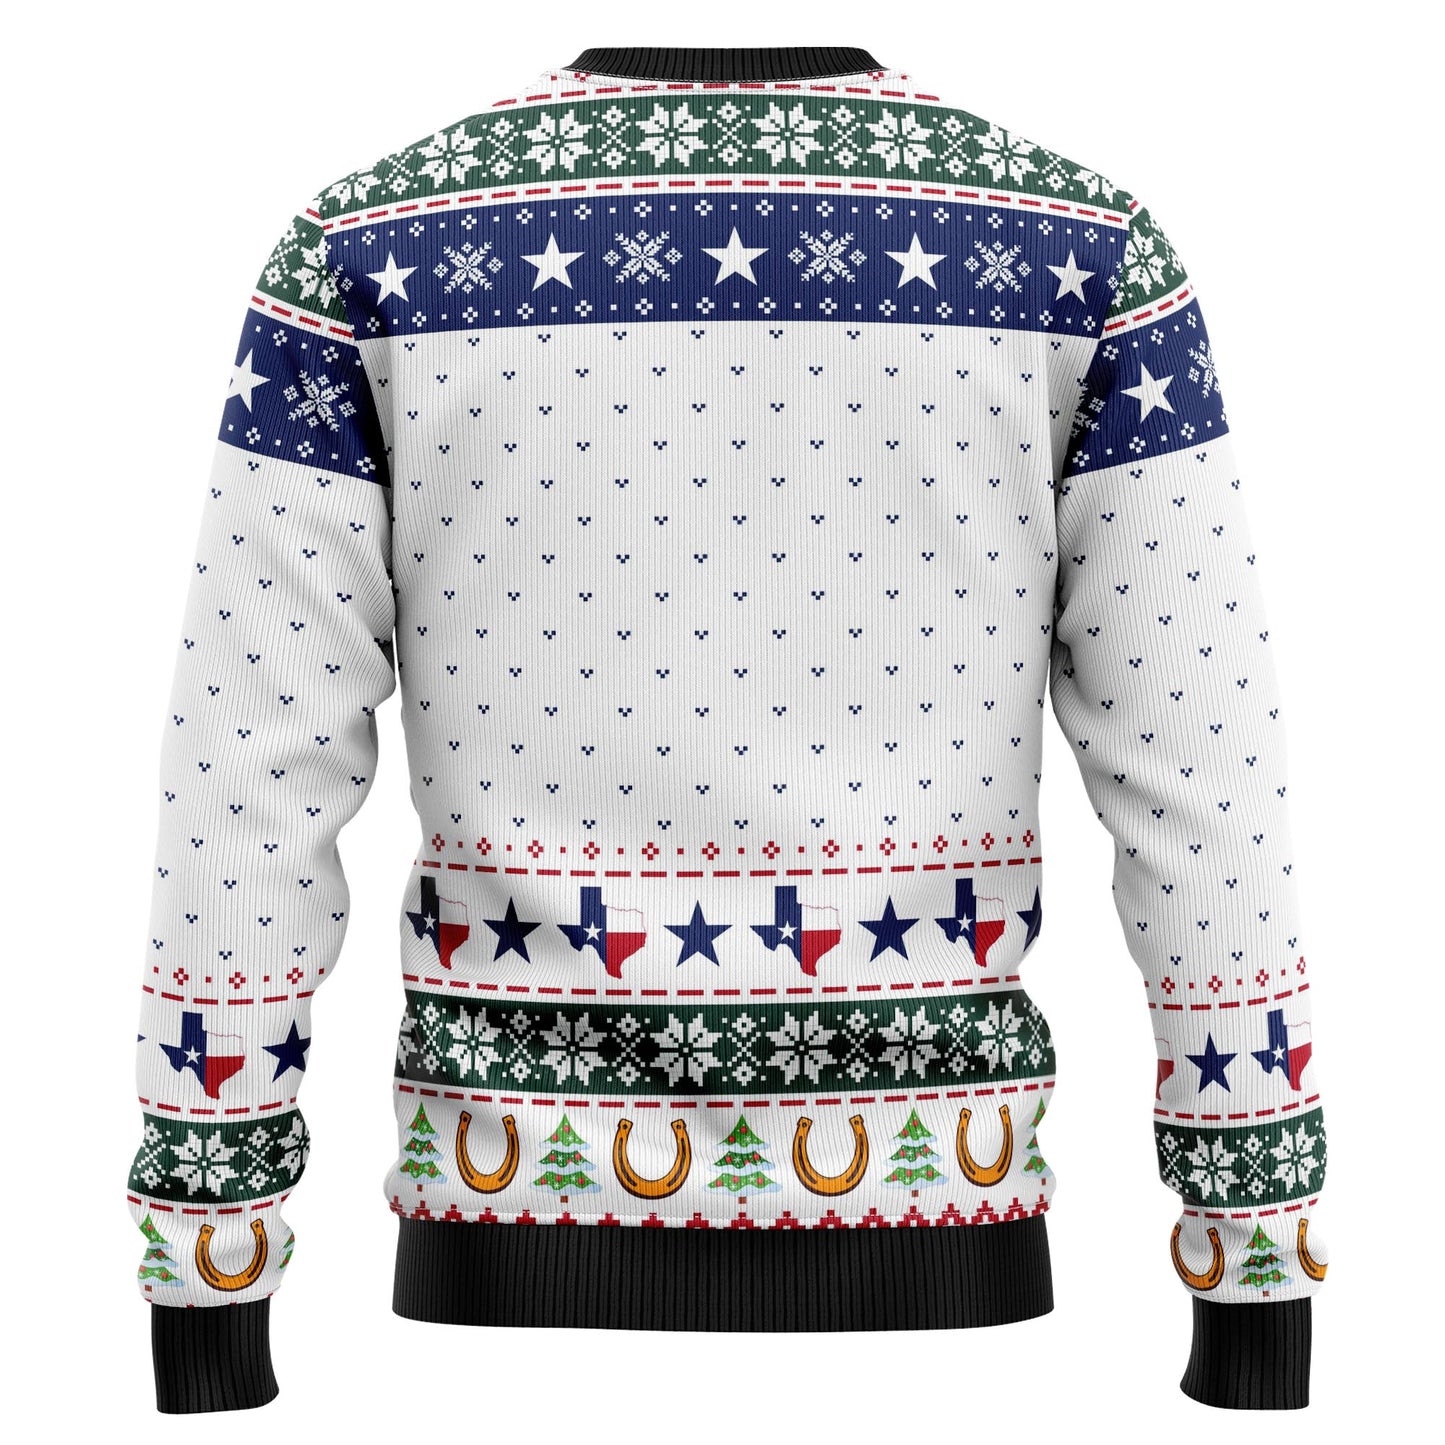 Merry Christmas Y'all Texas TG5129 Ugly Christmas Sweater